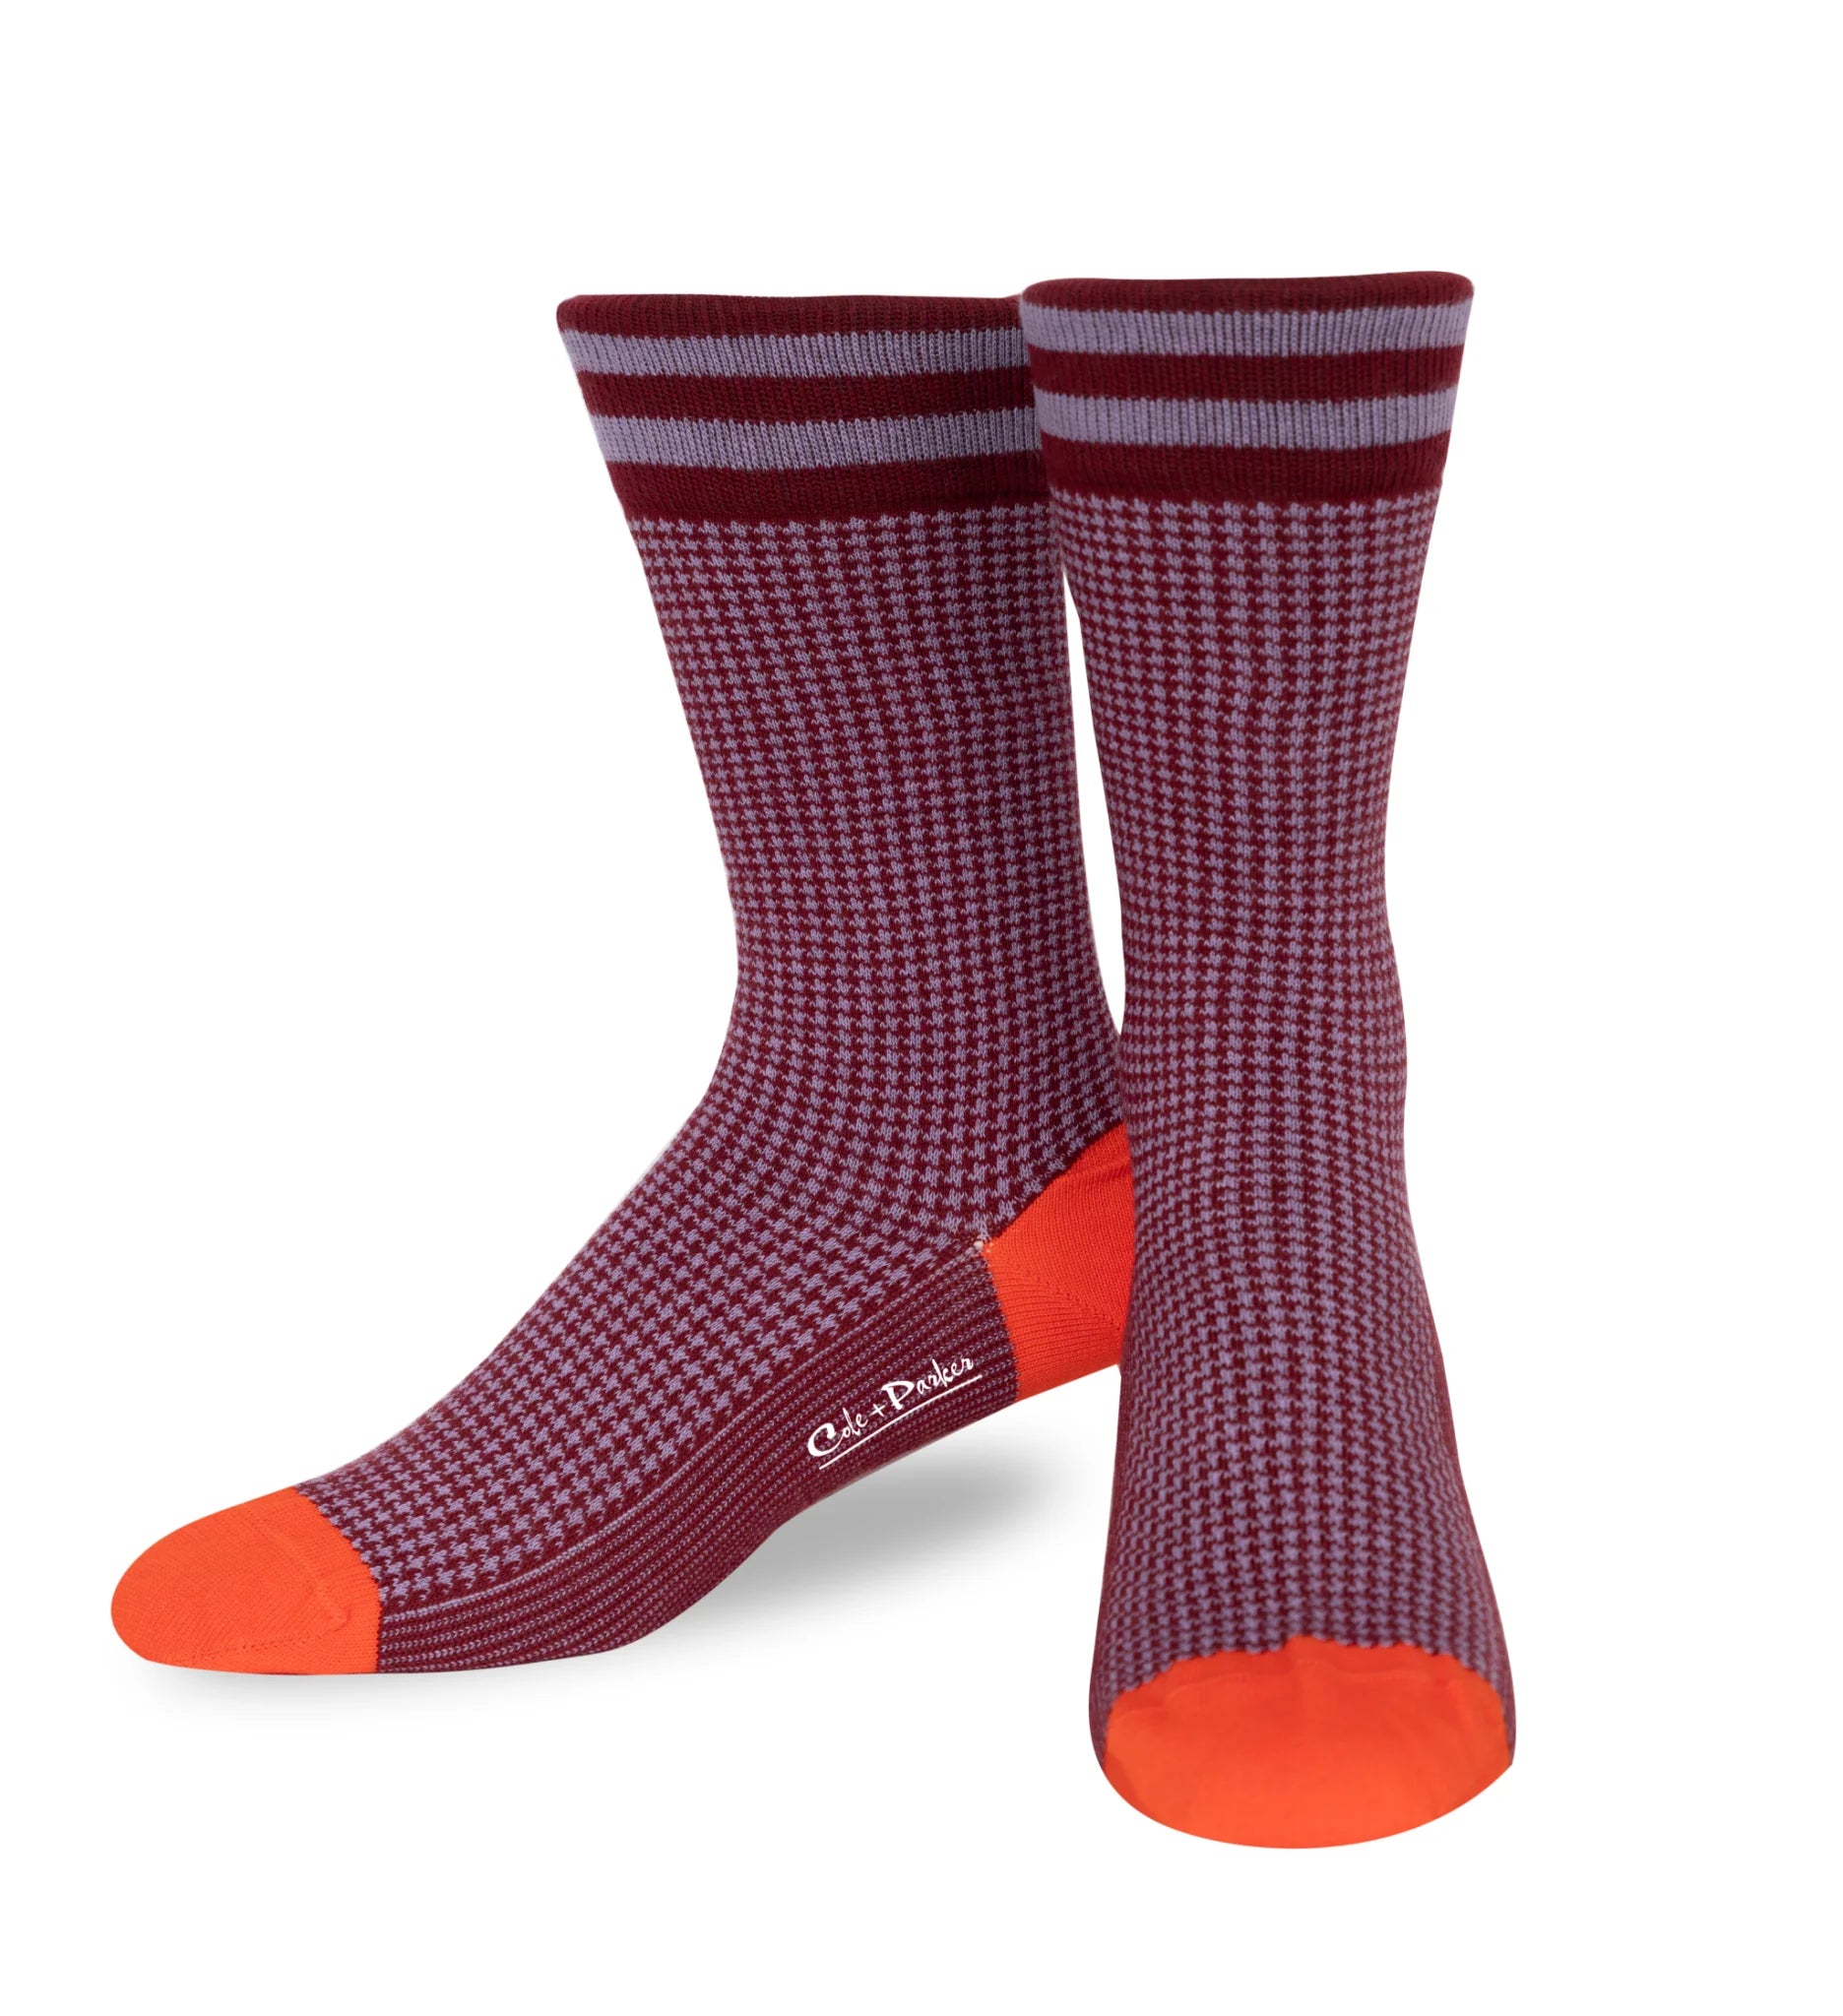 Red and purple socks